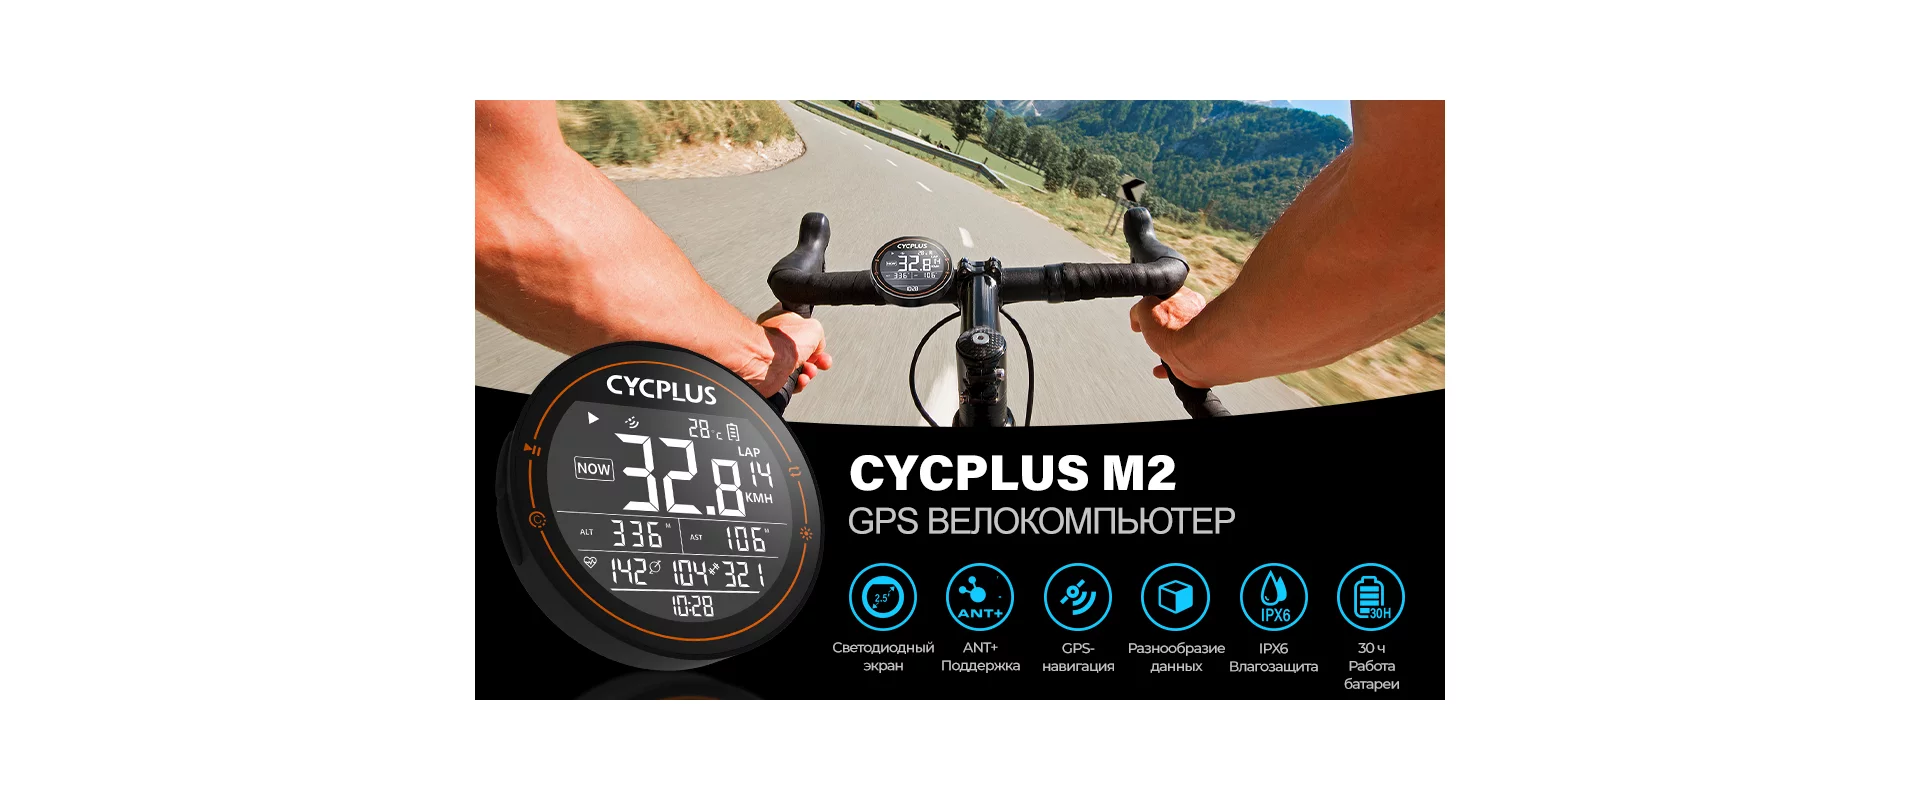 Cycplus M2 GPS 19 функций / Велокомпьютер беспроводной фото 1